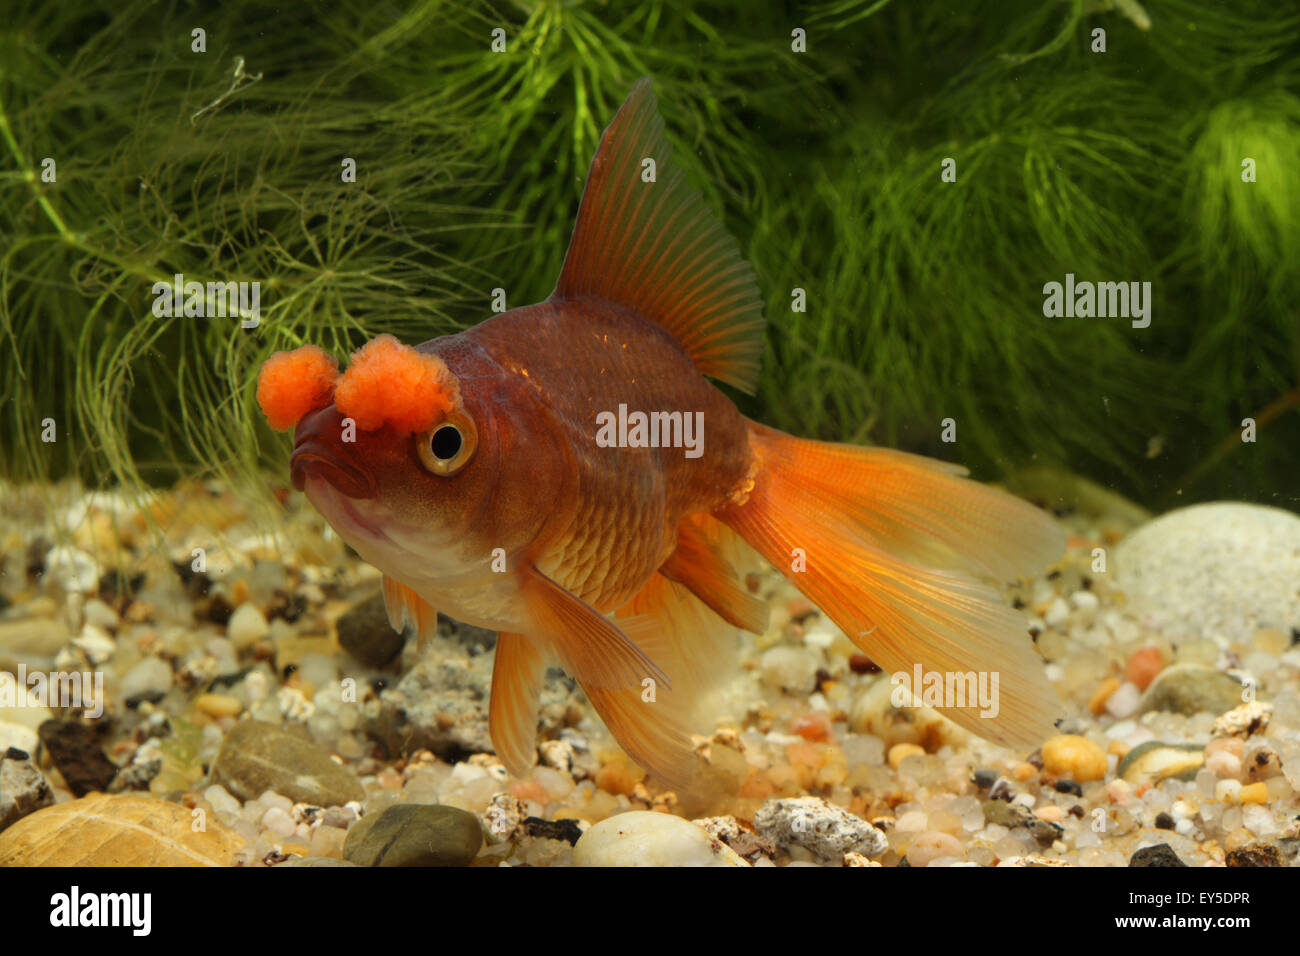 Goldfish 'Pompon' or Hana Fusa goldfish in aquarium Stock Photo